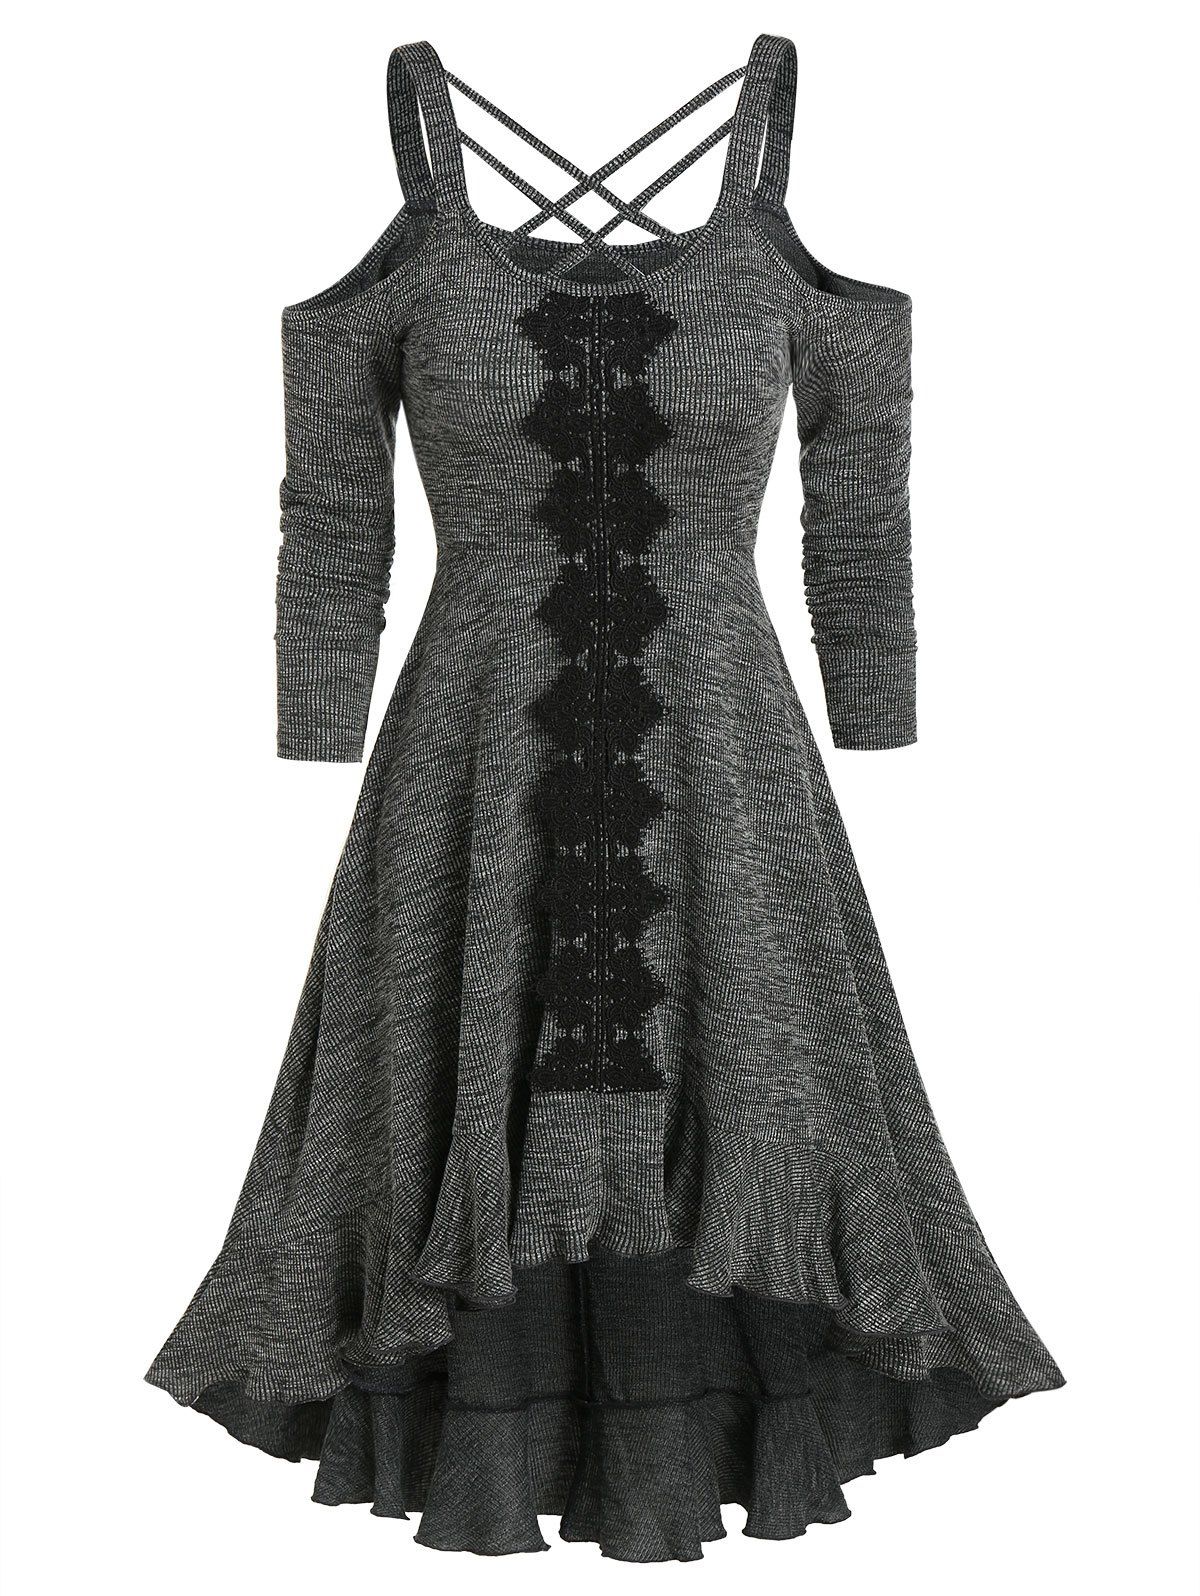 Vintage Heathered High Low Dress Cutout Lattice Crisscross Cold Shoulder Flounce Dip Hem Dress - DARK SLATE GREY M